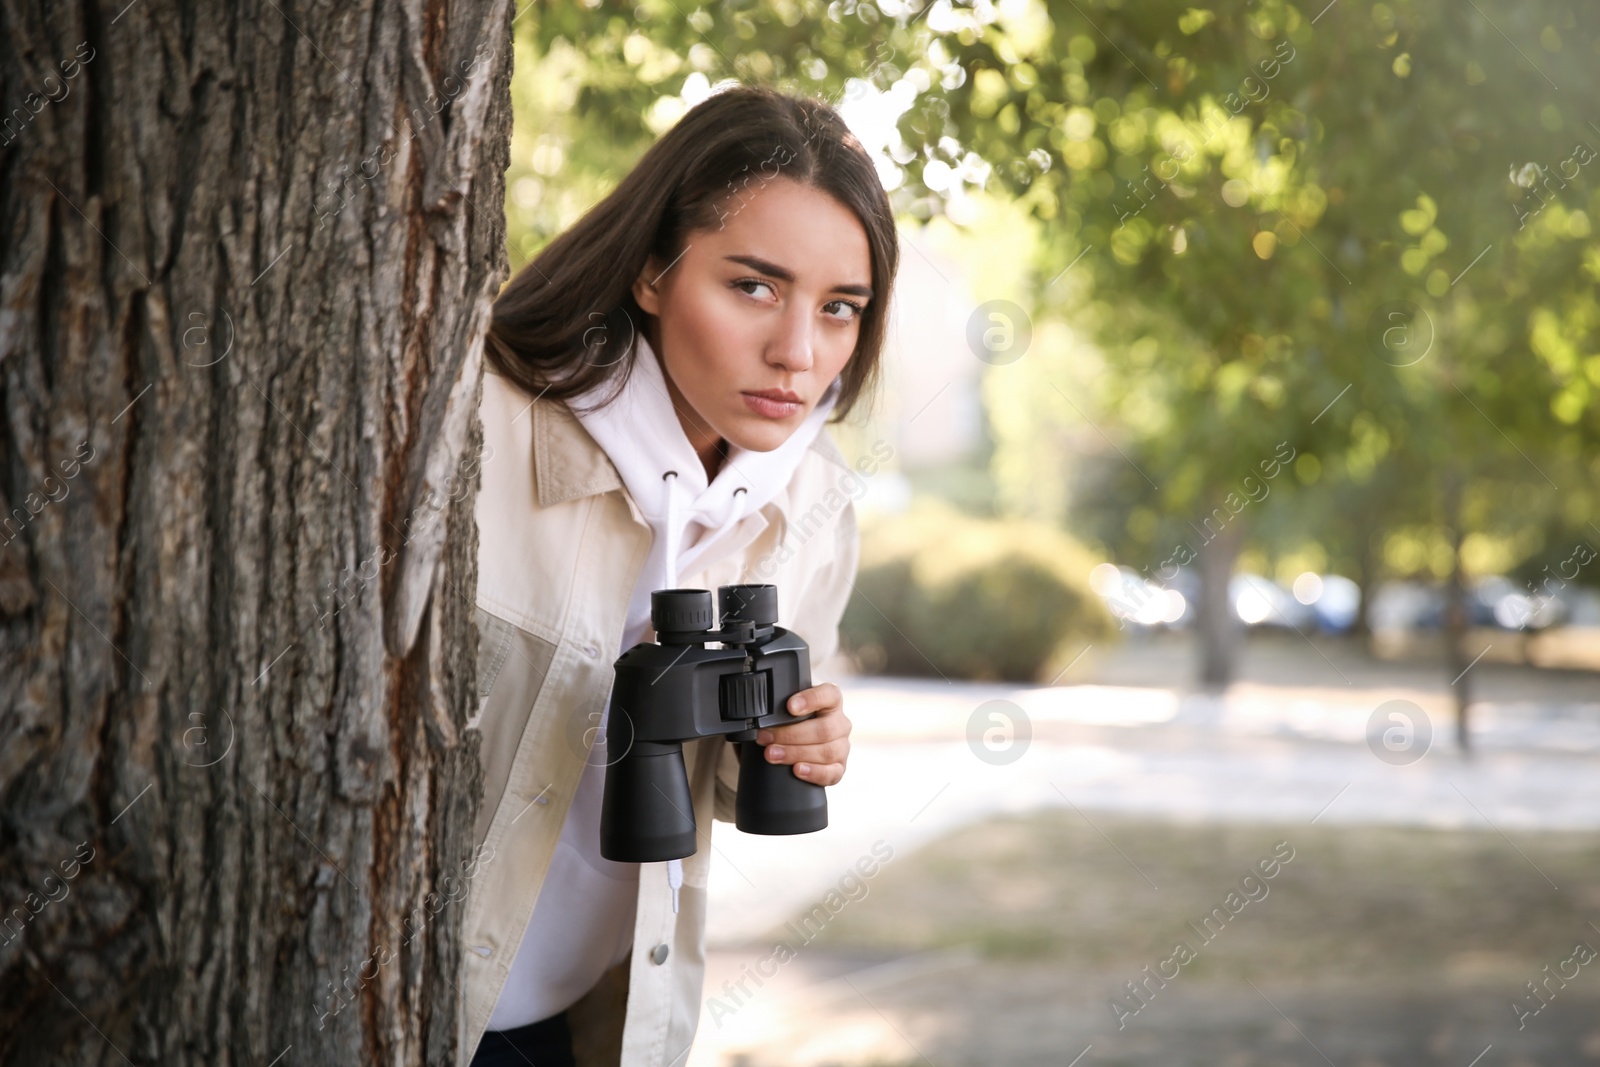 Photo of Jealous woman with binoculars spying on ex boyfriend in park